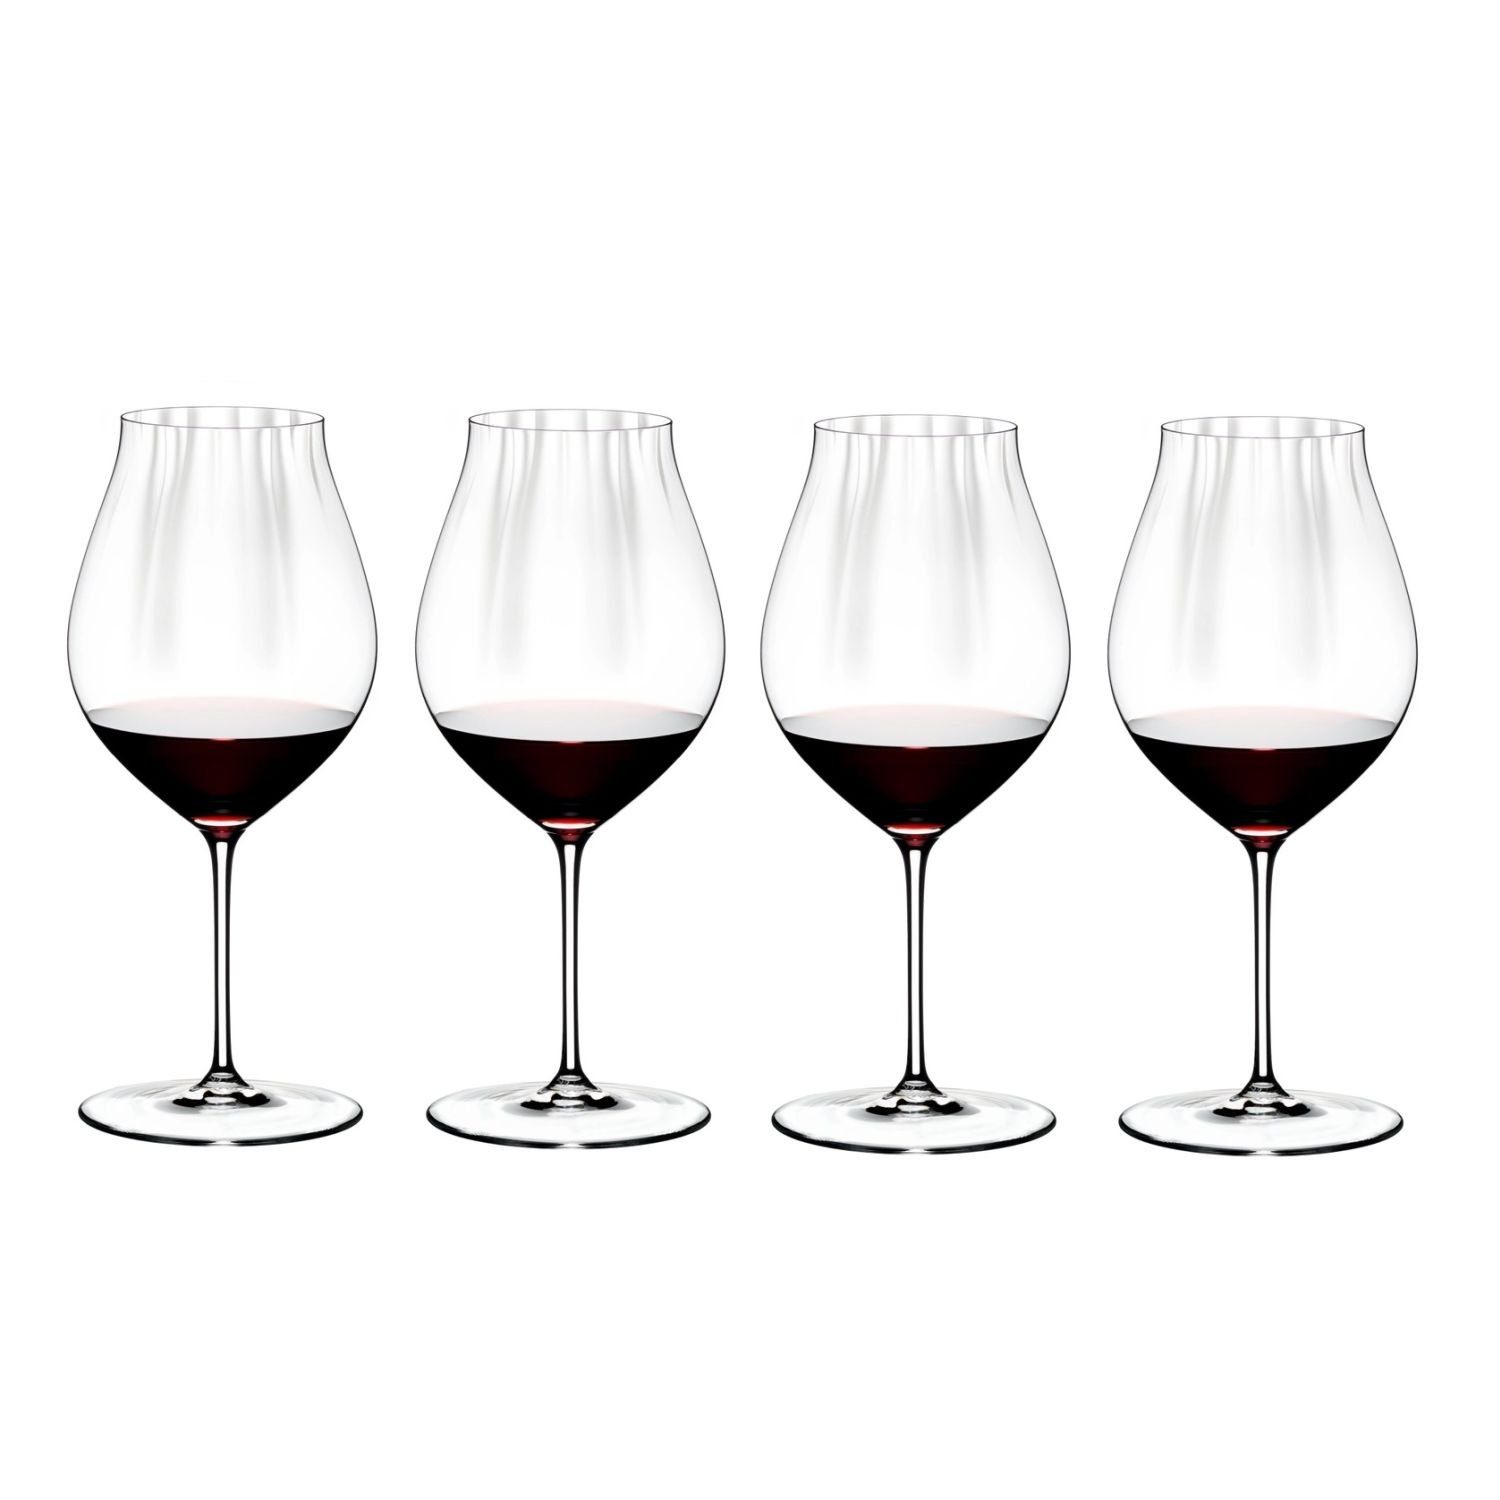 RIEDEL THE WINE GLASS COMPANY Weinglas Riedel Performance Pinot Noir 4er Set, Kristallglas